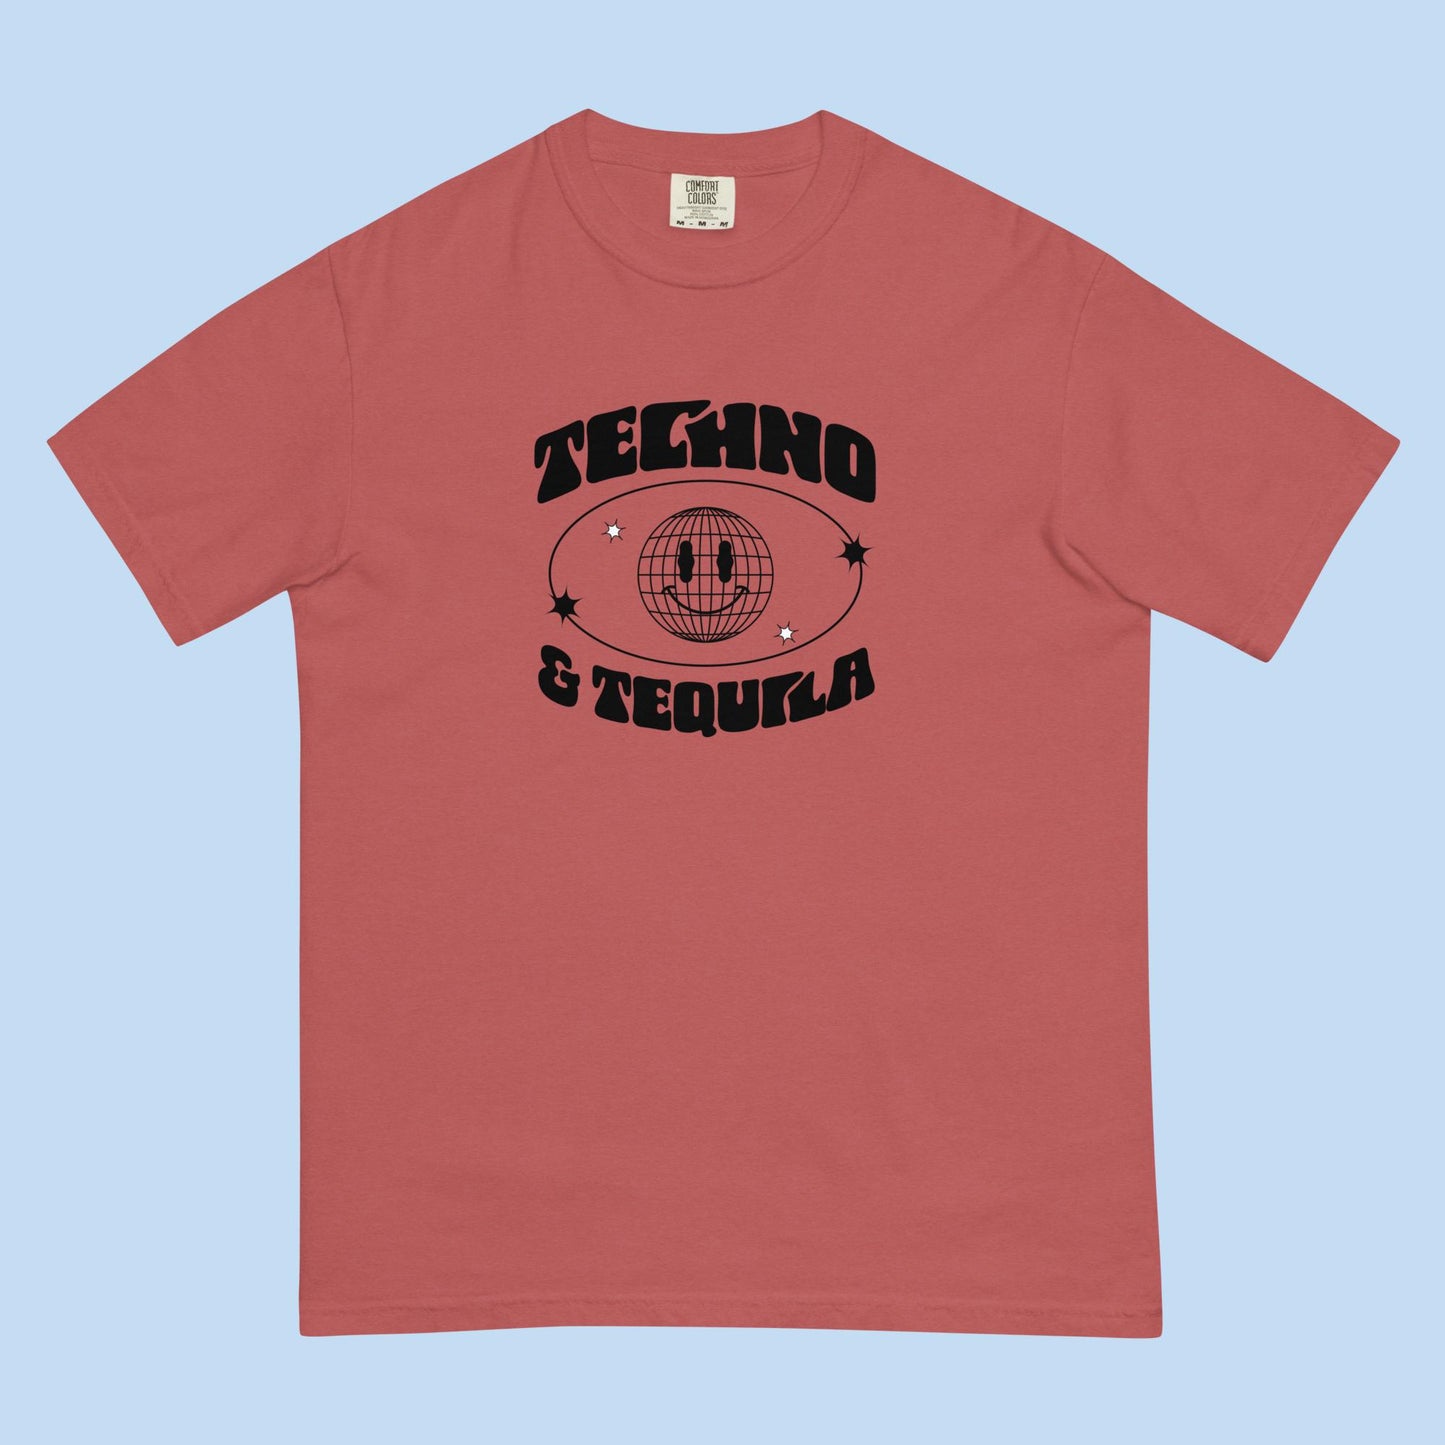 Techno & Tequila Garment-Dyed Heavyweight T-Shirt